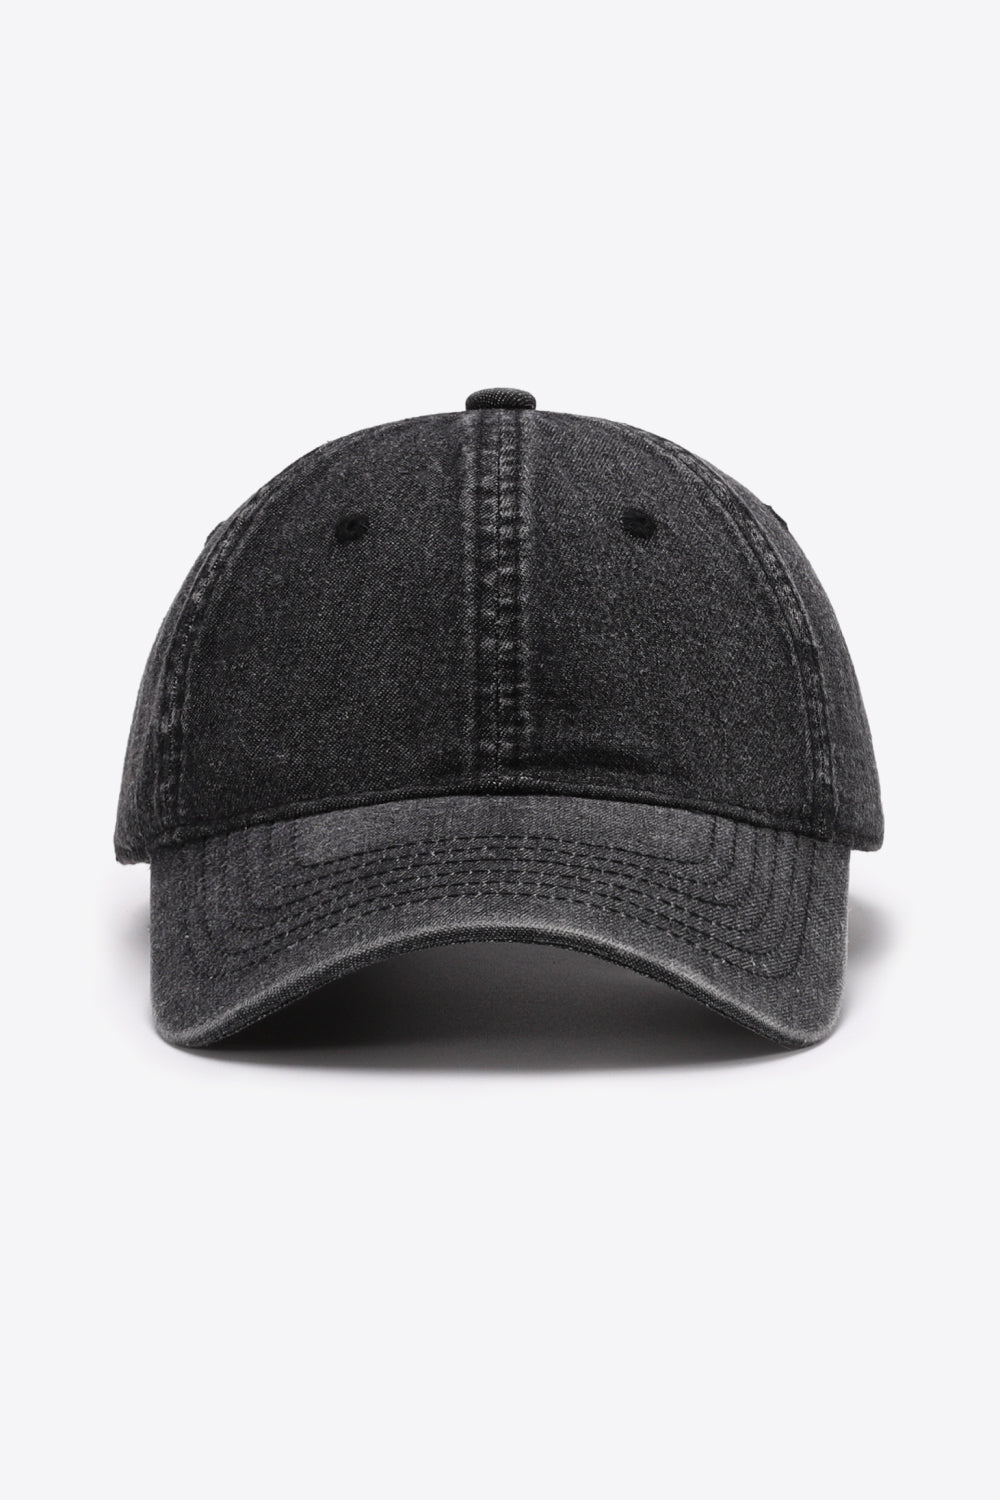 Plain Adjustable Baseball Cap Print on any thing USA/STOD clothes